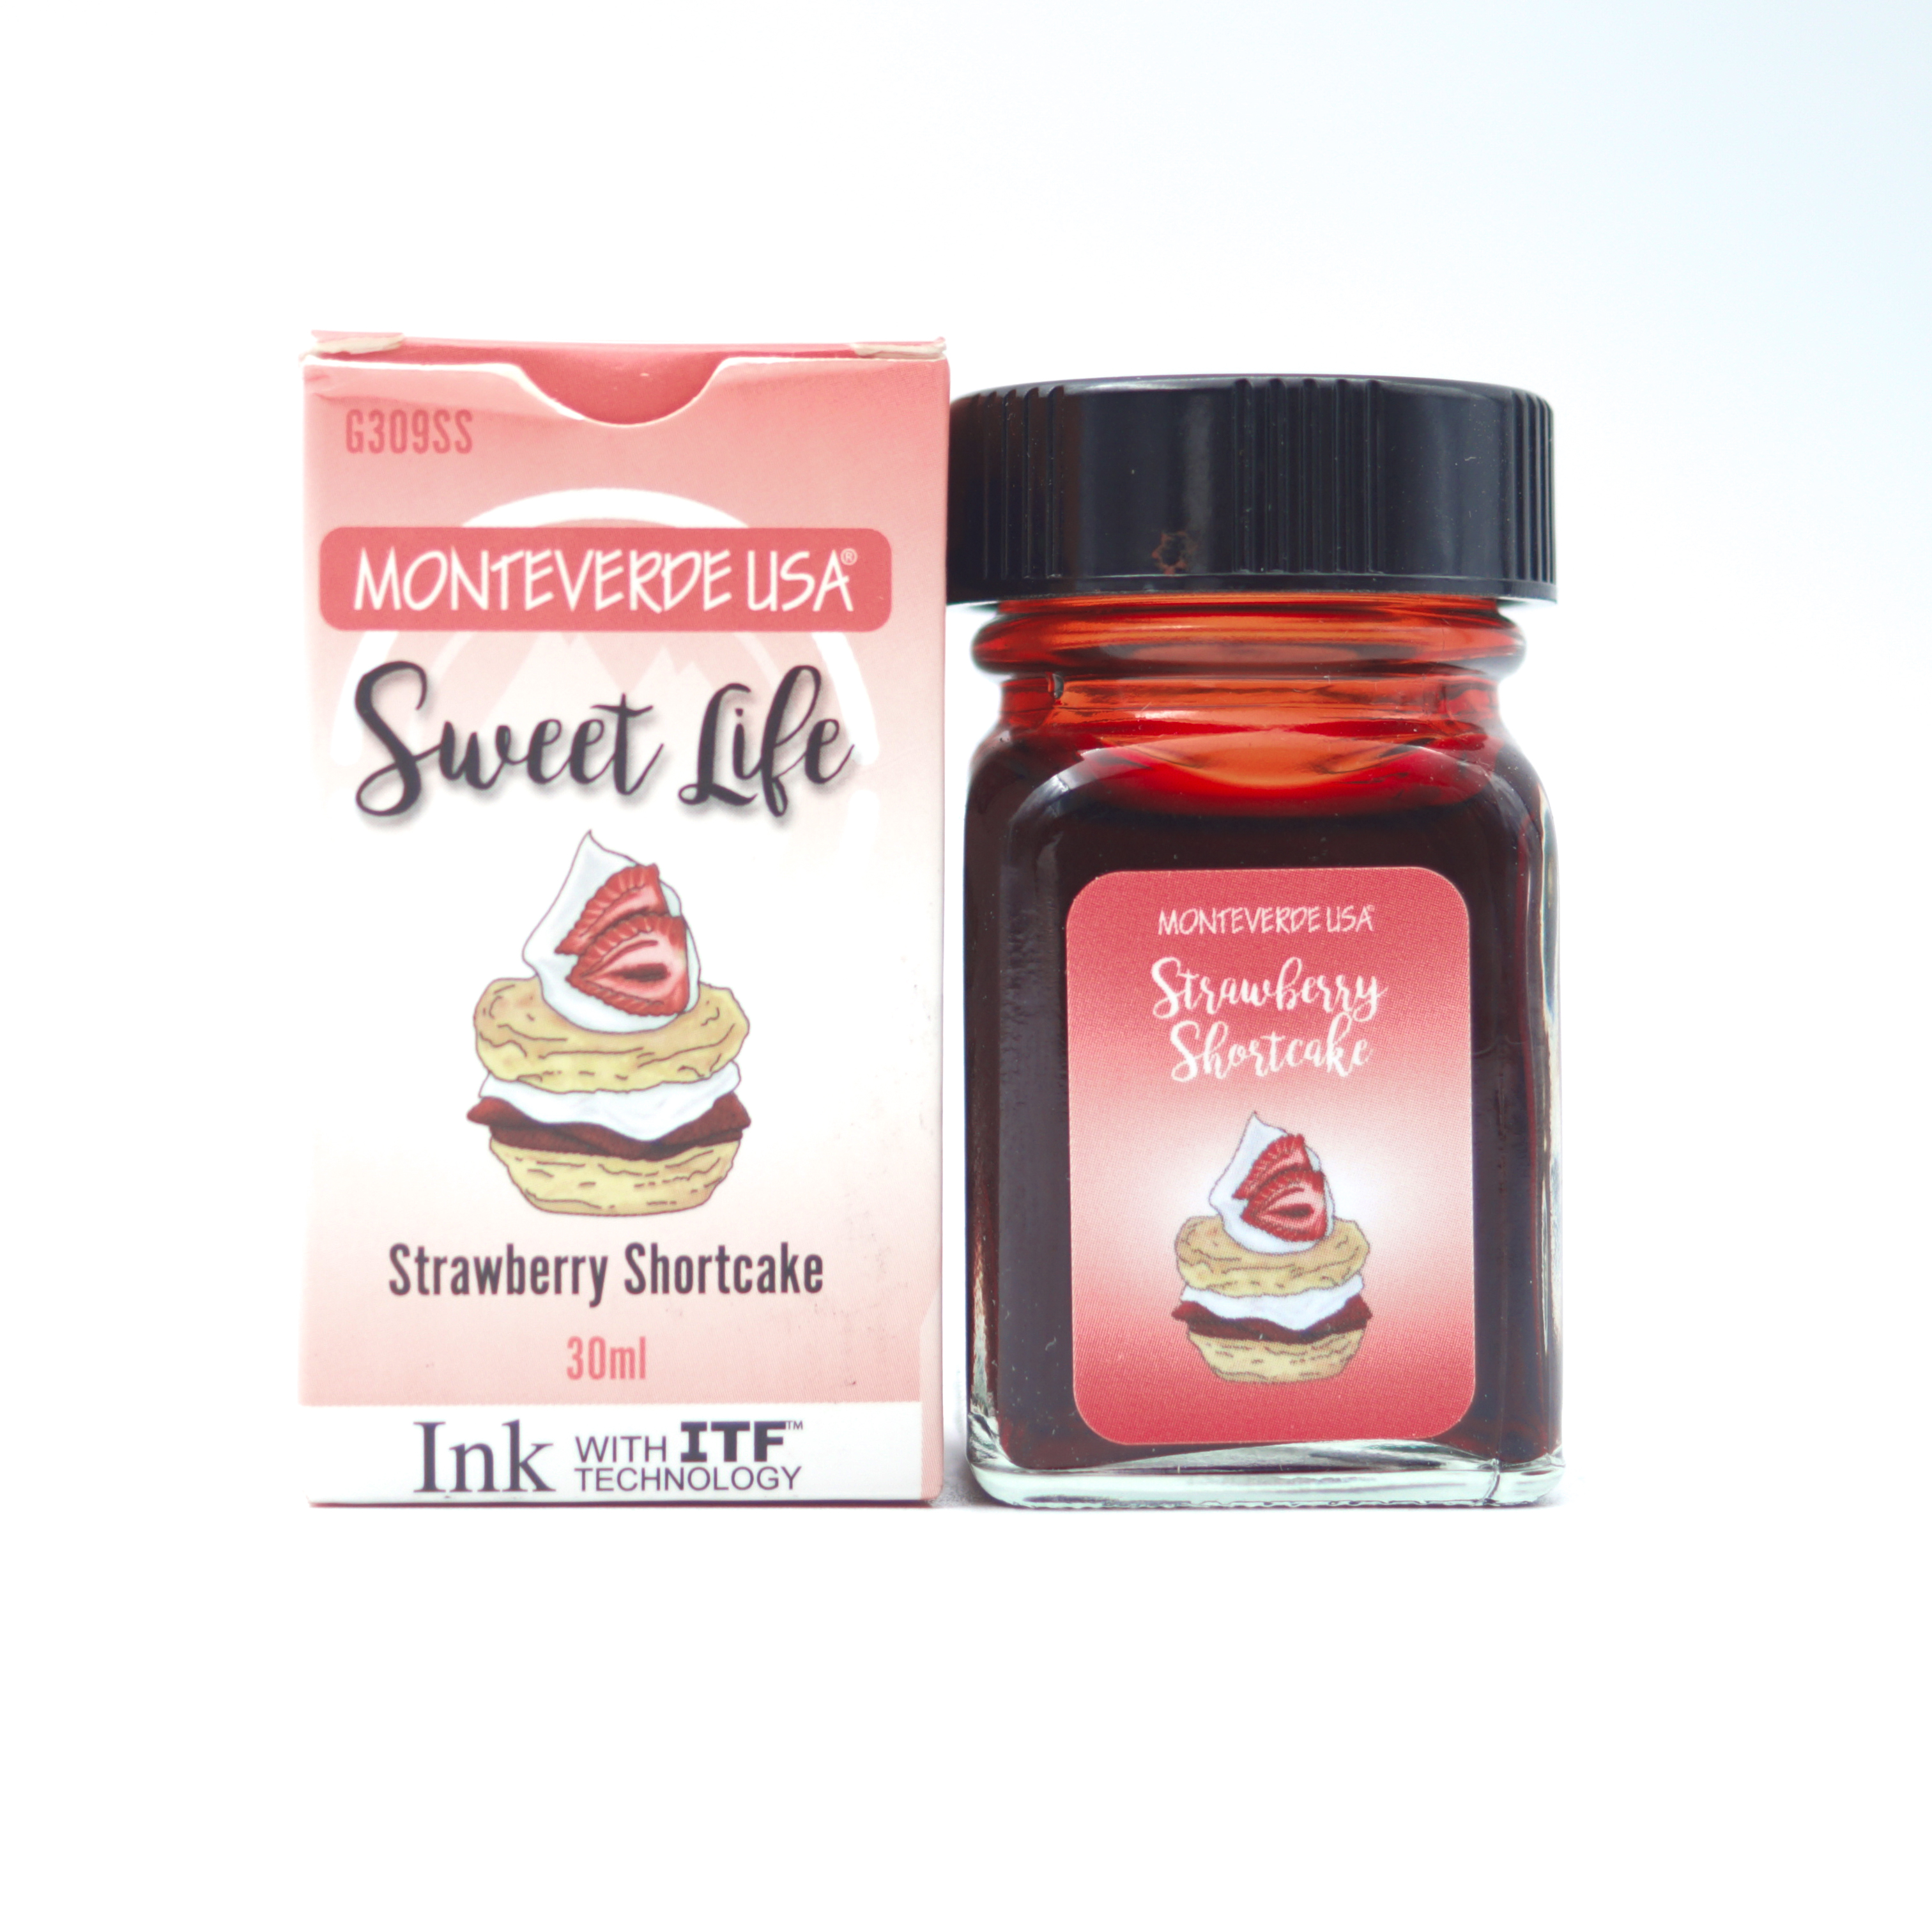 MONTEVERDE USA Sweet life Strawberry ShortCake 30ml  Ink SKU 70841